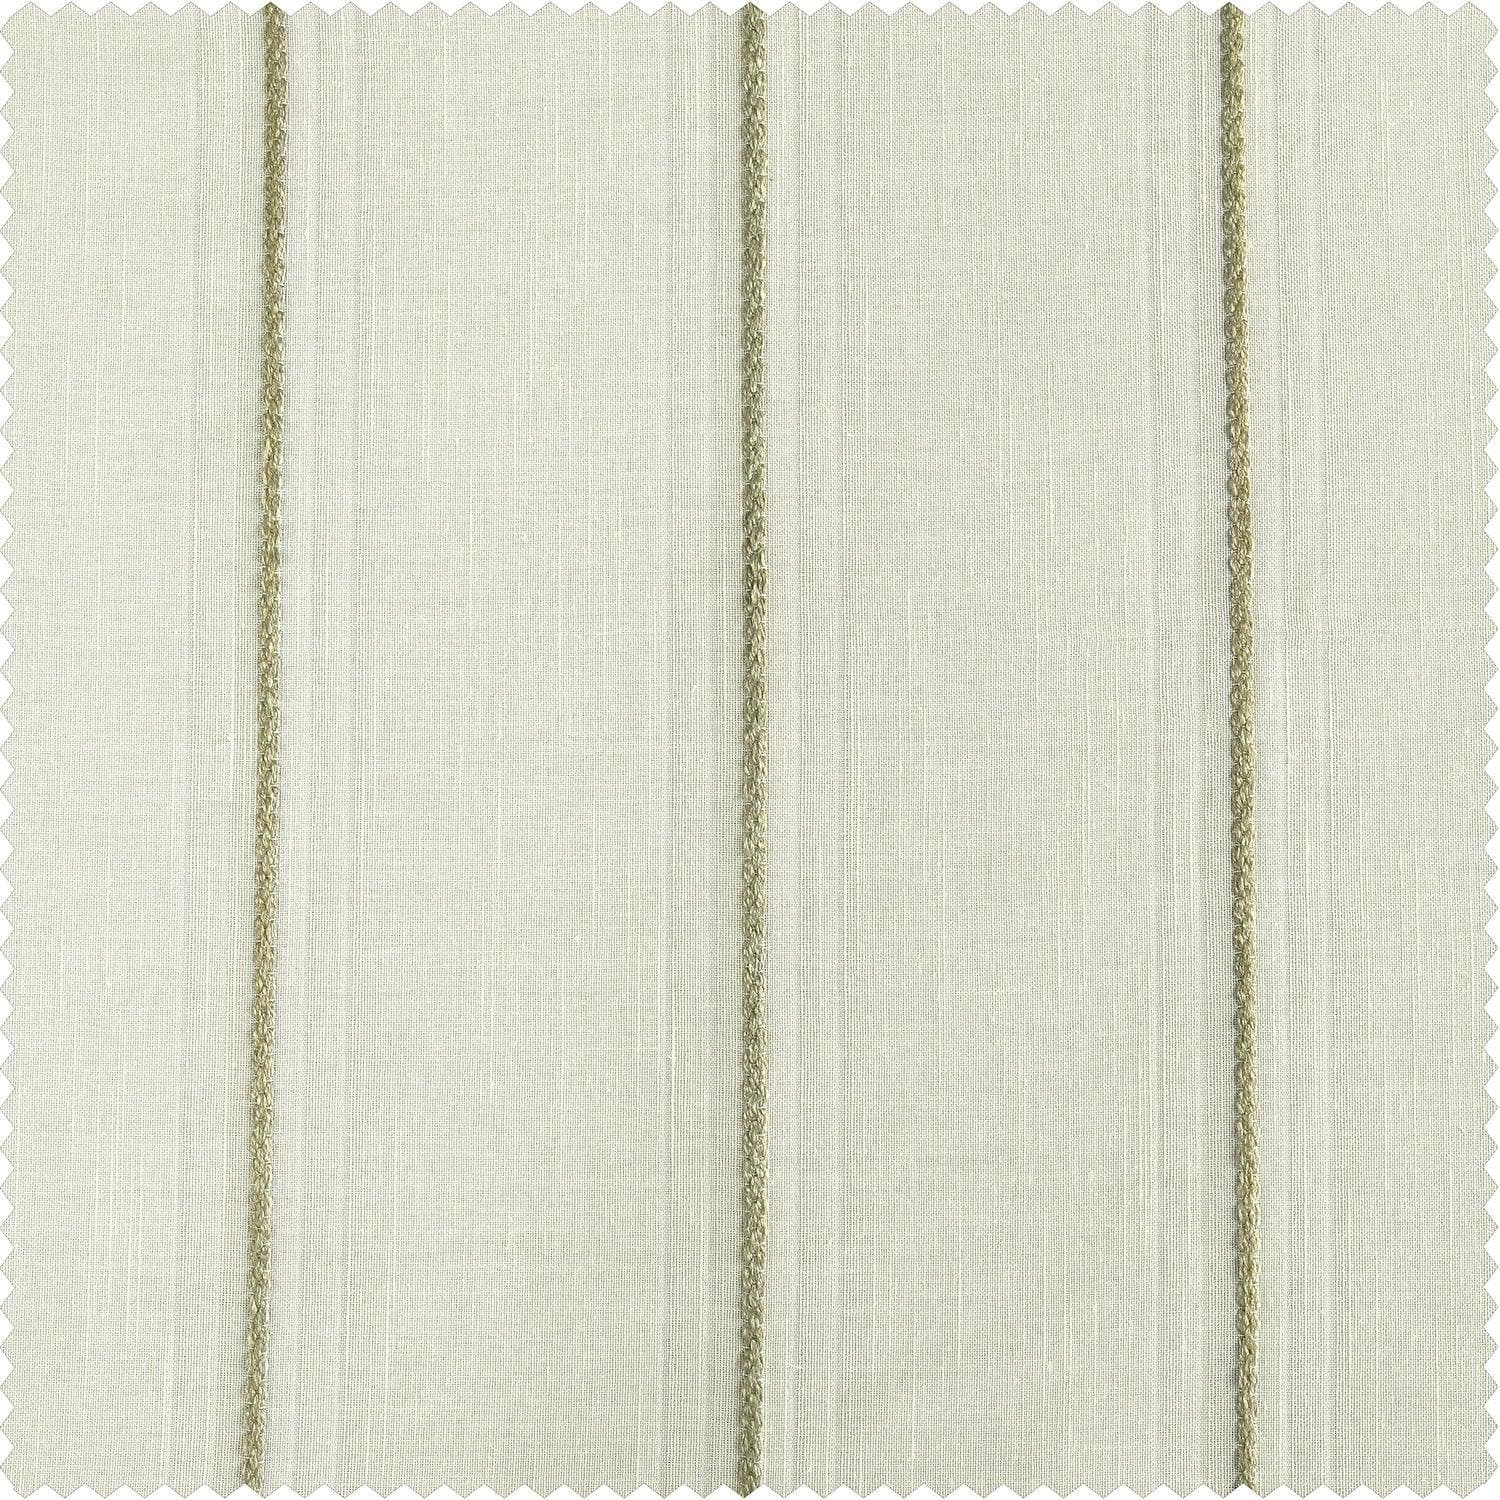 Meridian Gold Striped Linen Sheer Curtain Pair (2 Panels)